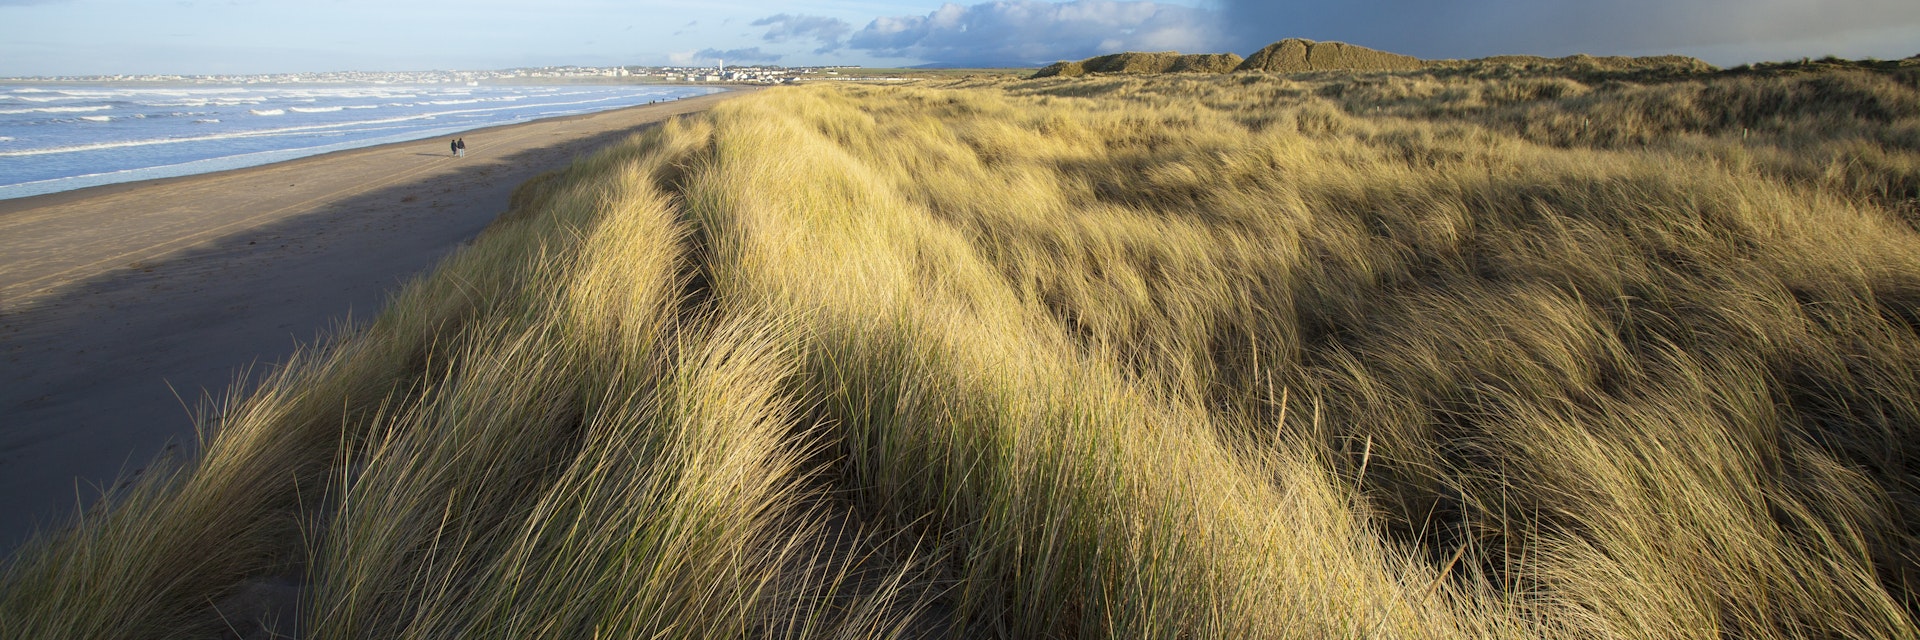 Beach and dunes at Enniscrone, Sligo, Ireland